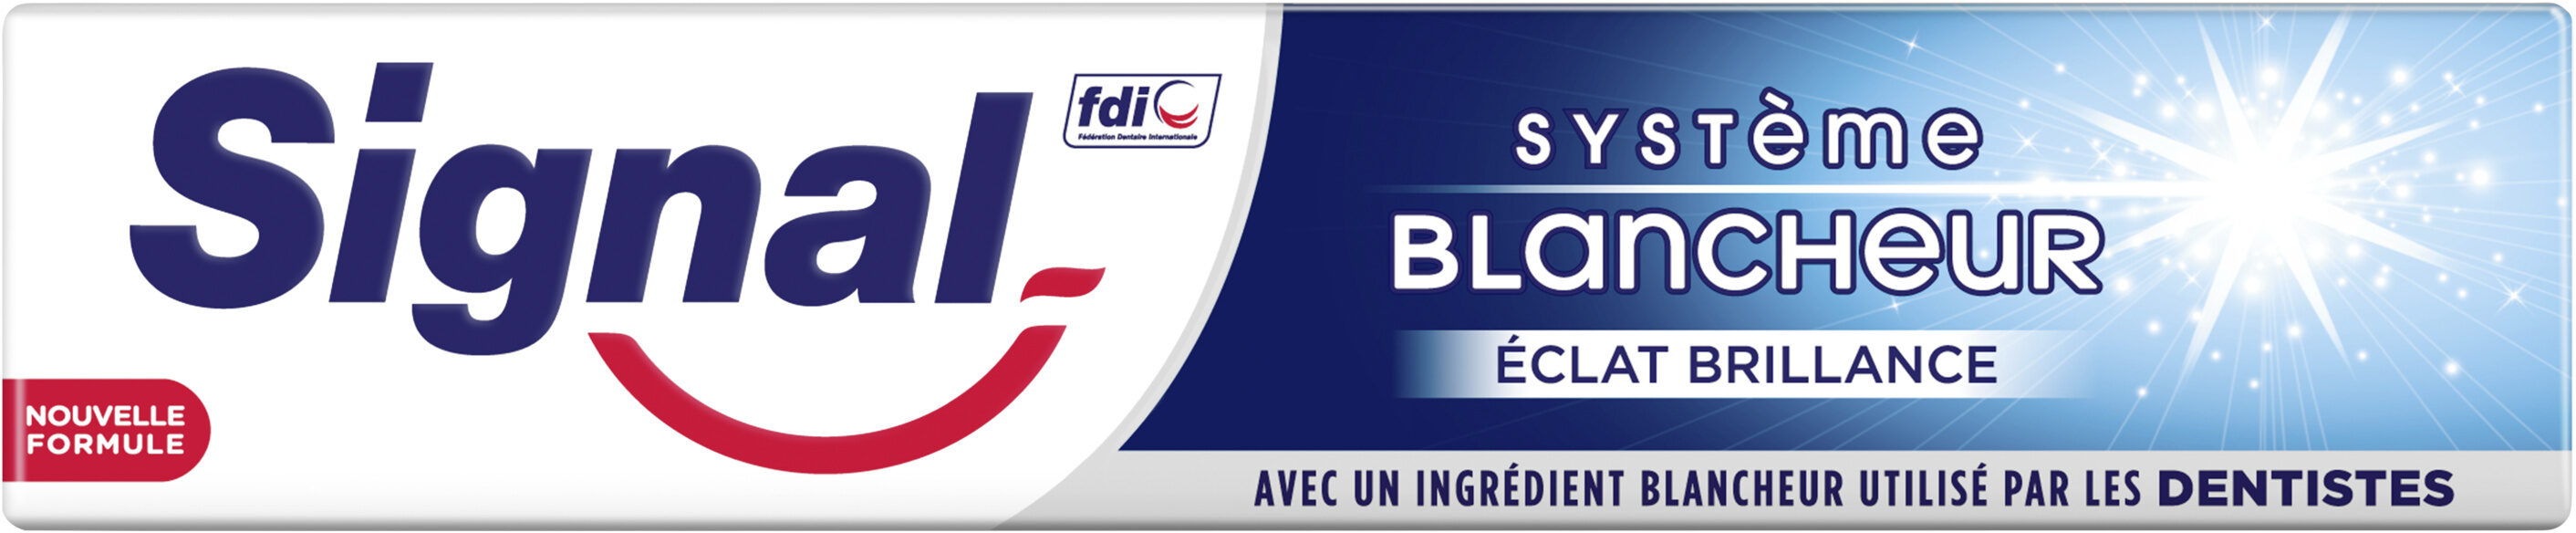 Signal Dentifrice Système Blancheur Éclat Brillance 75ml - Product - fr